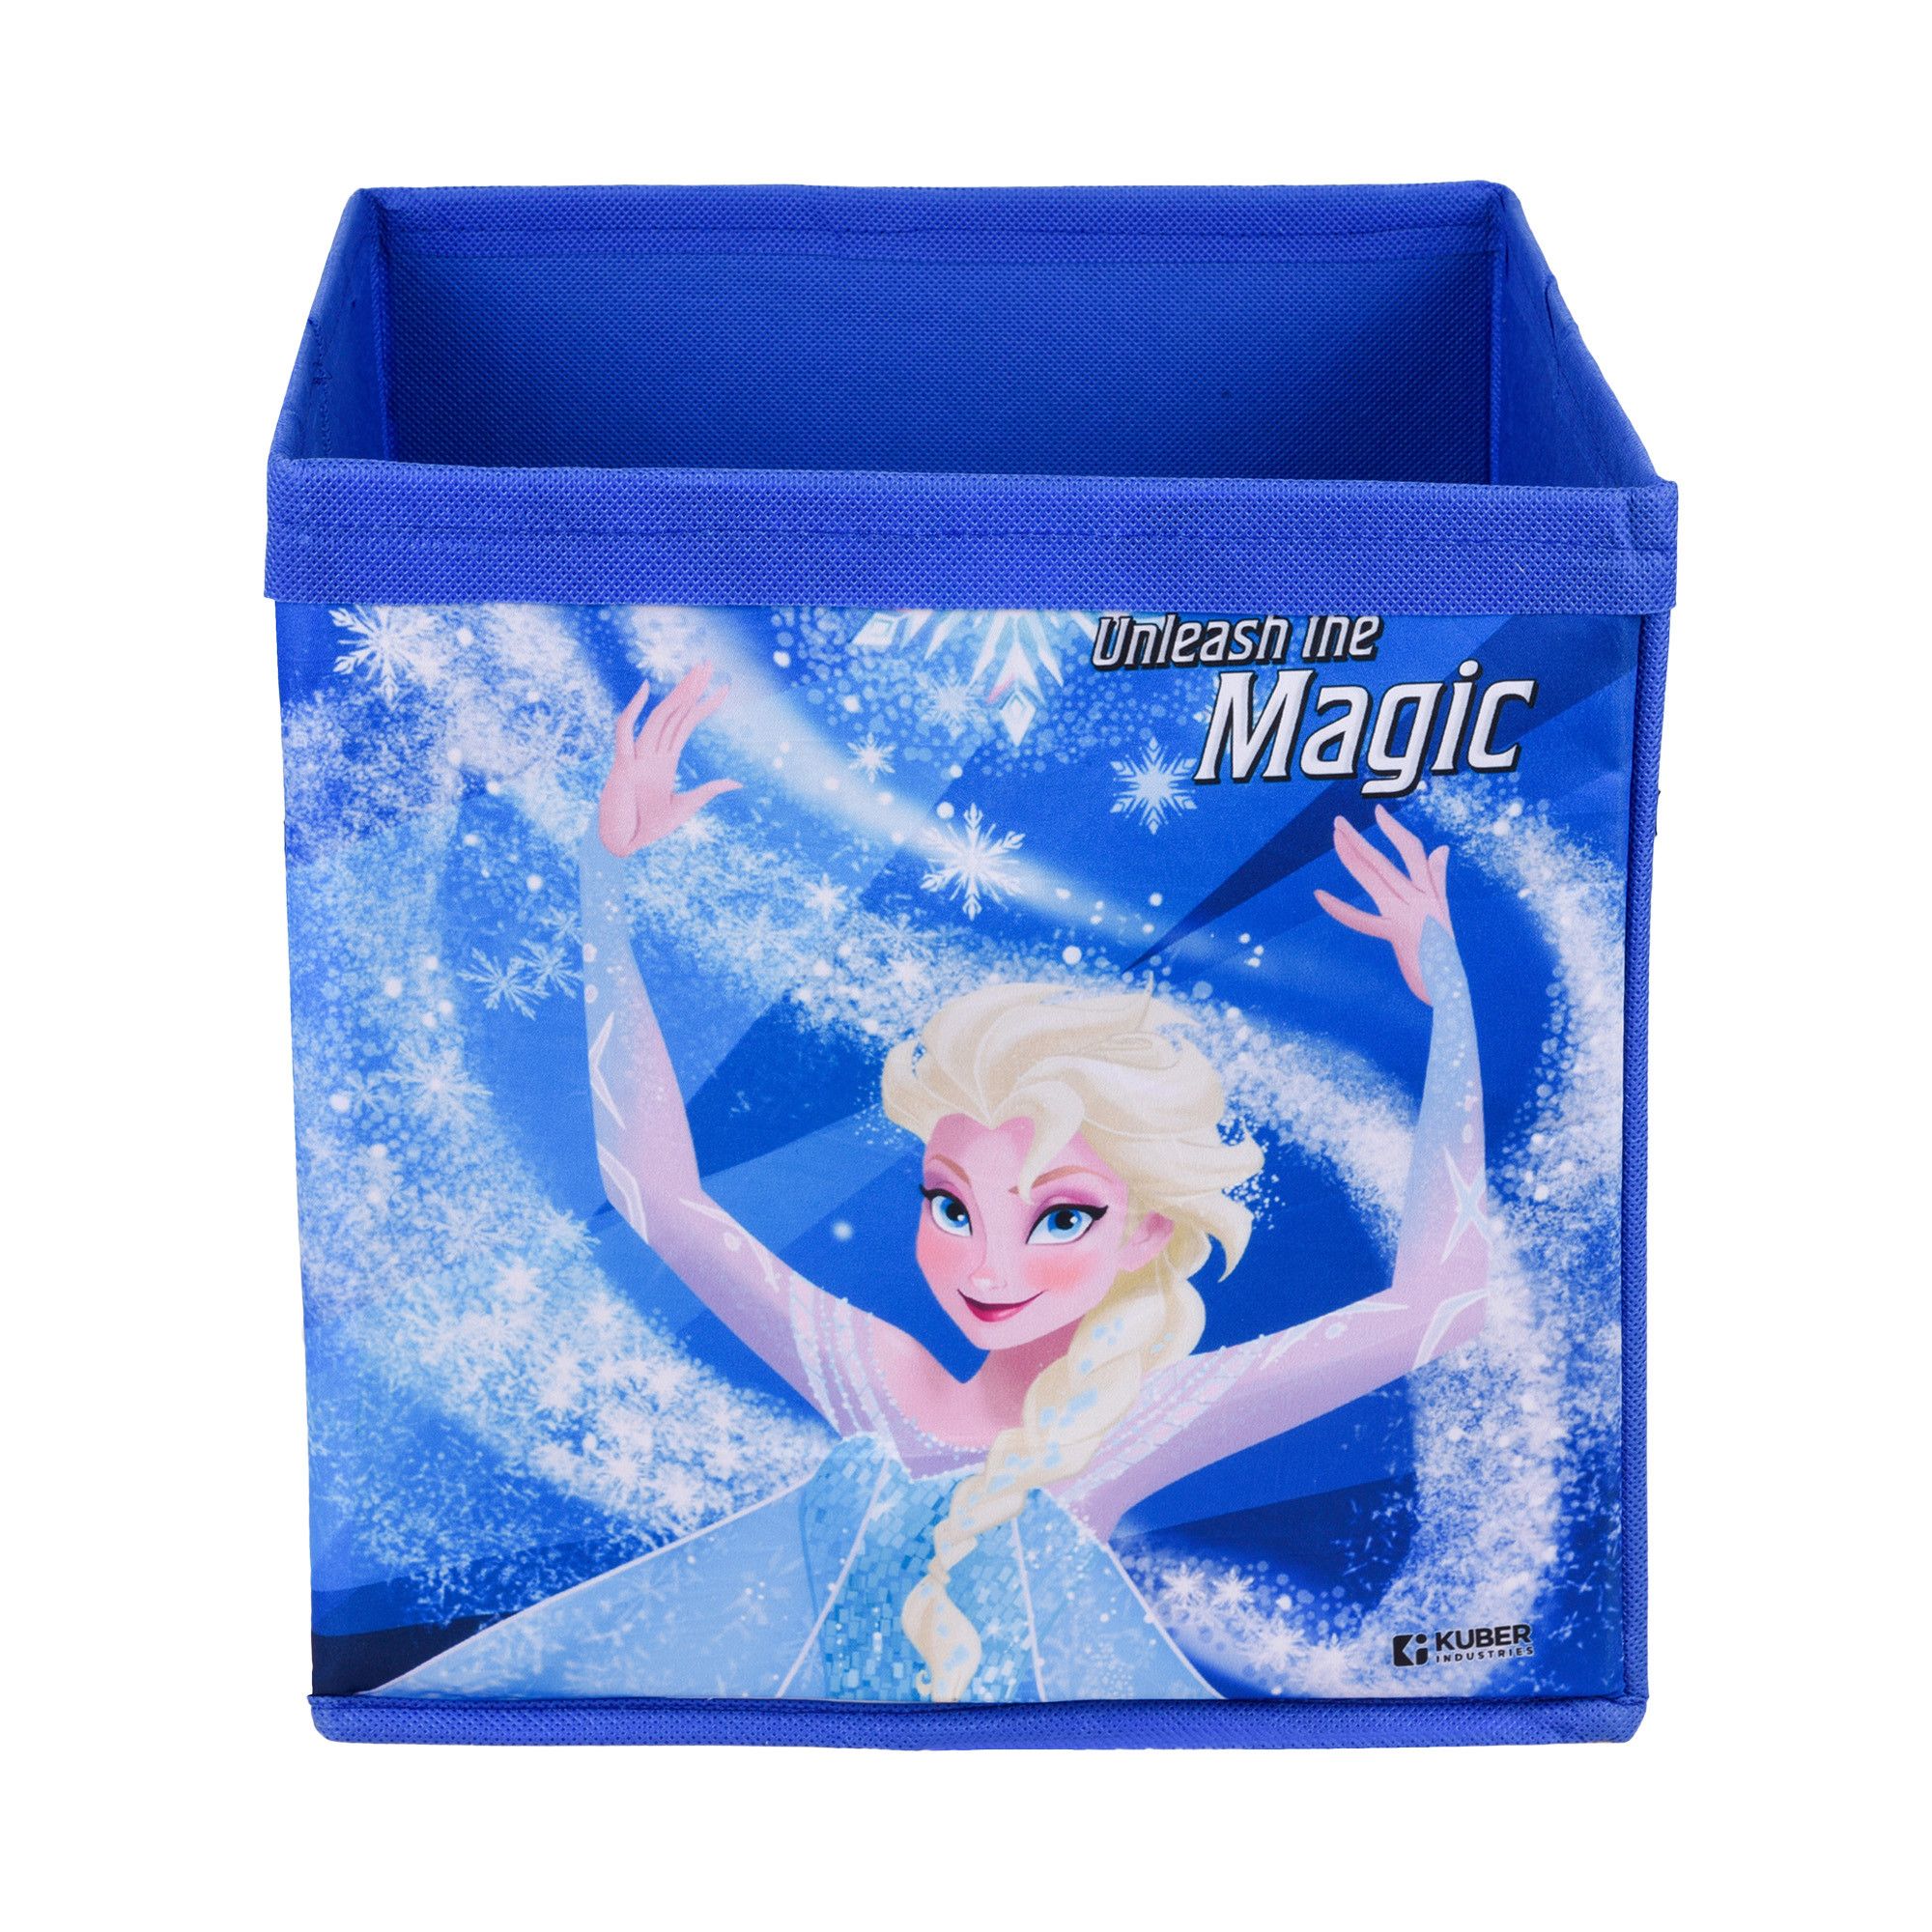 Kuber Industries Storage Box | Square Toy Storage Box | Wardrobe Organizer for Clothes-Books-Toys | Stationary Organizer | Drawer Organizer Box with Handle | Disney Frozen | Blue